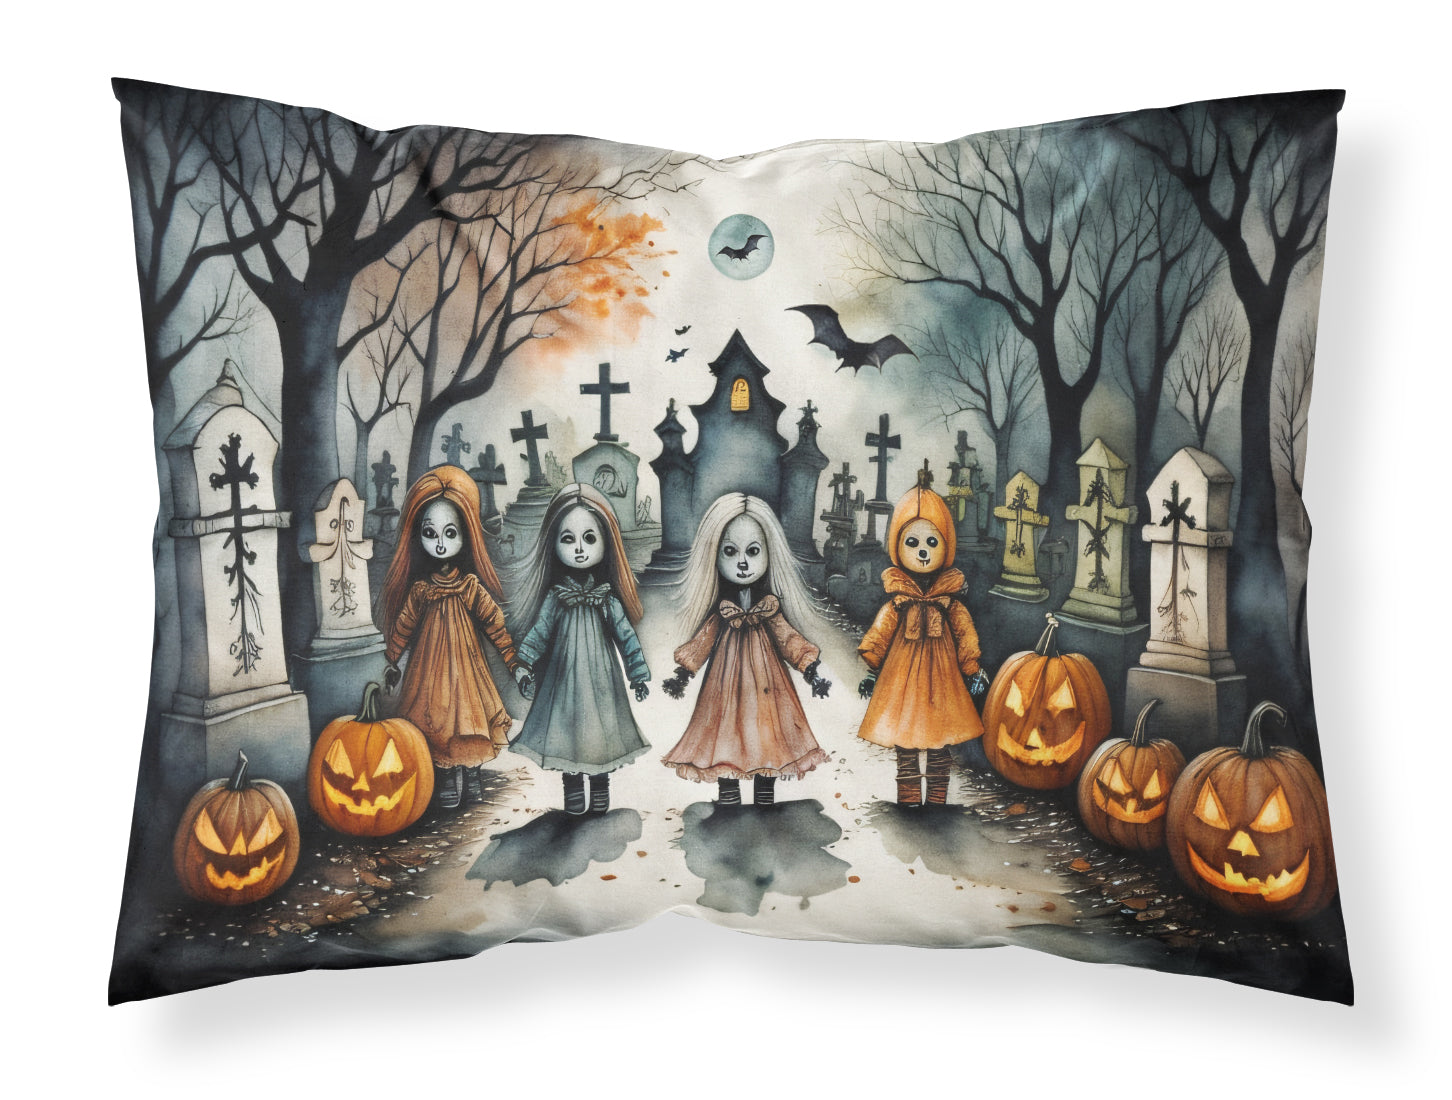 Buy this Creepy Dolls Spooky Halloween Fabric Standard Pillowcase